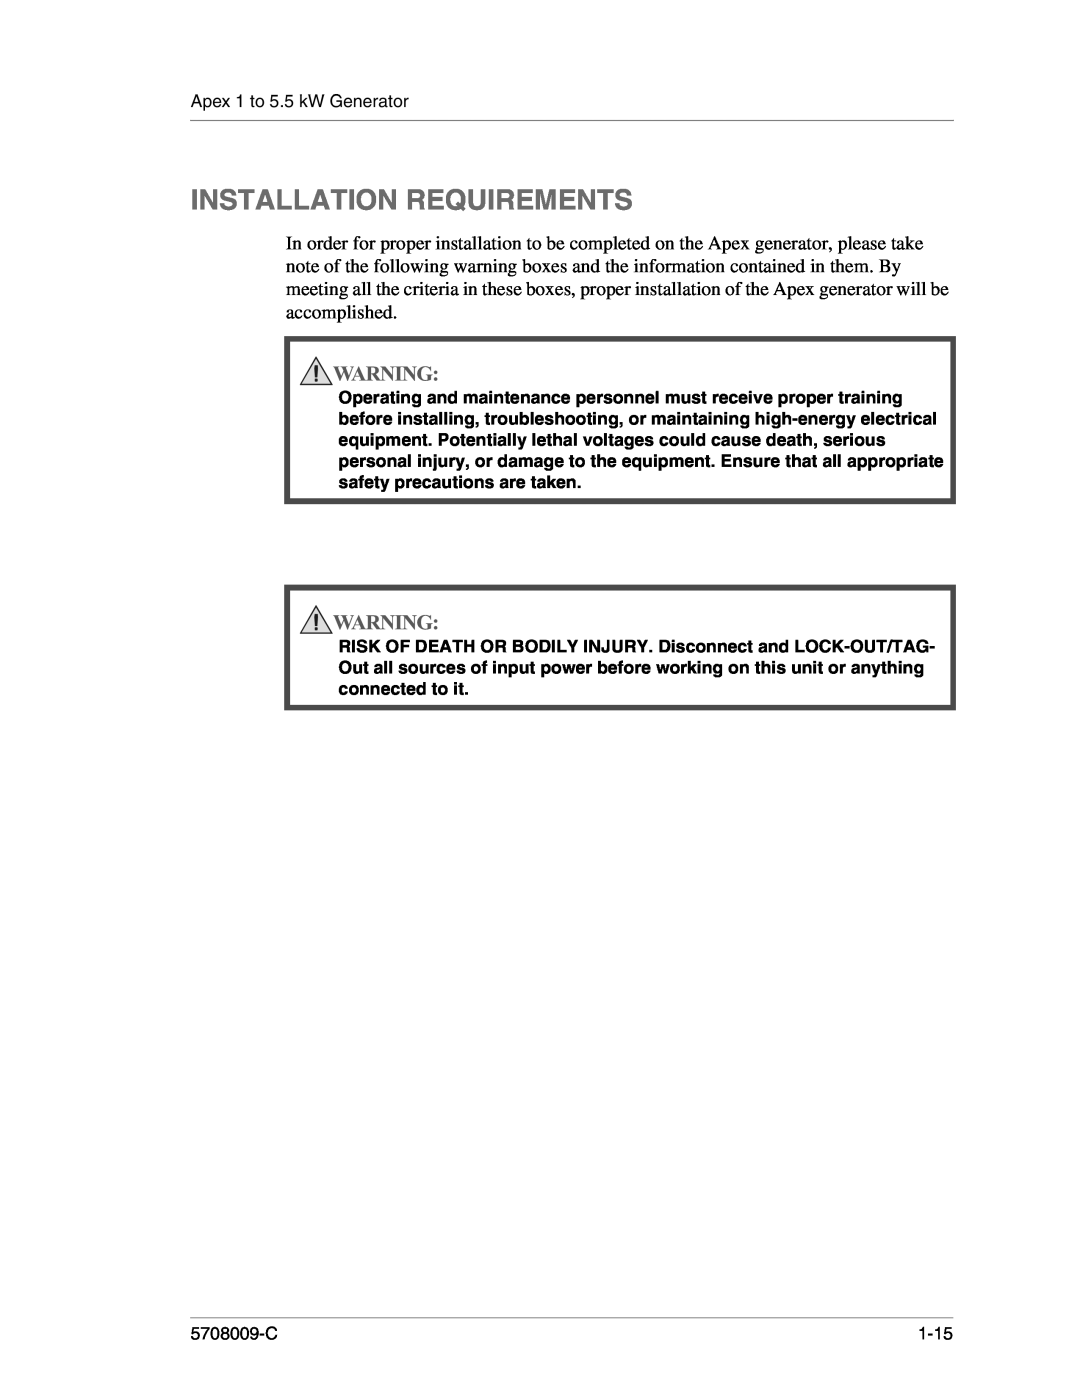 Apex Digital 5708009-C manual Installation Requirements 